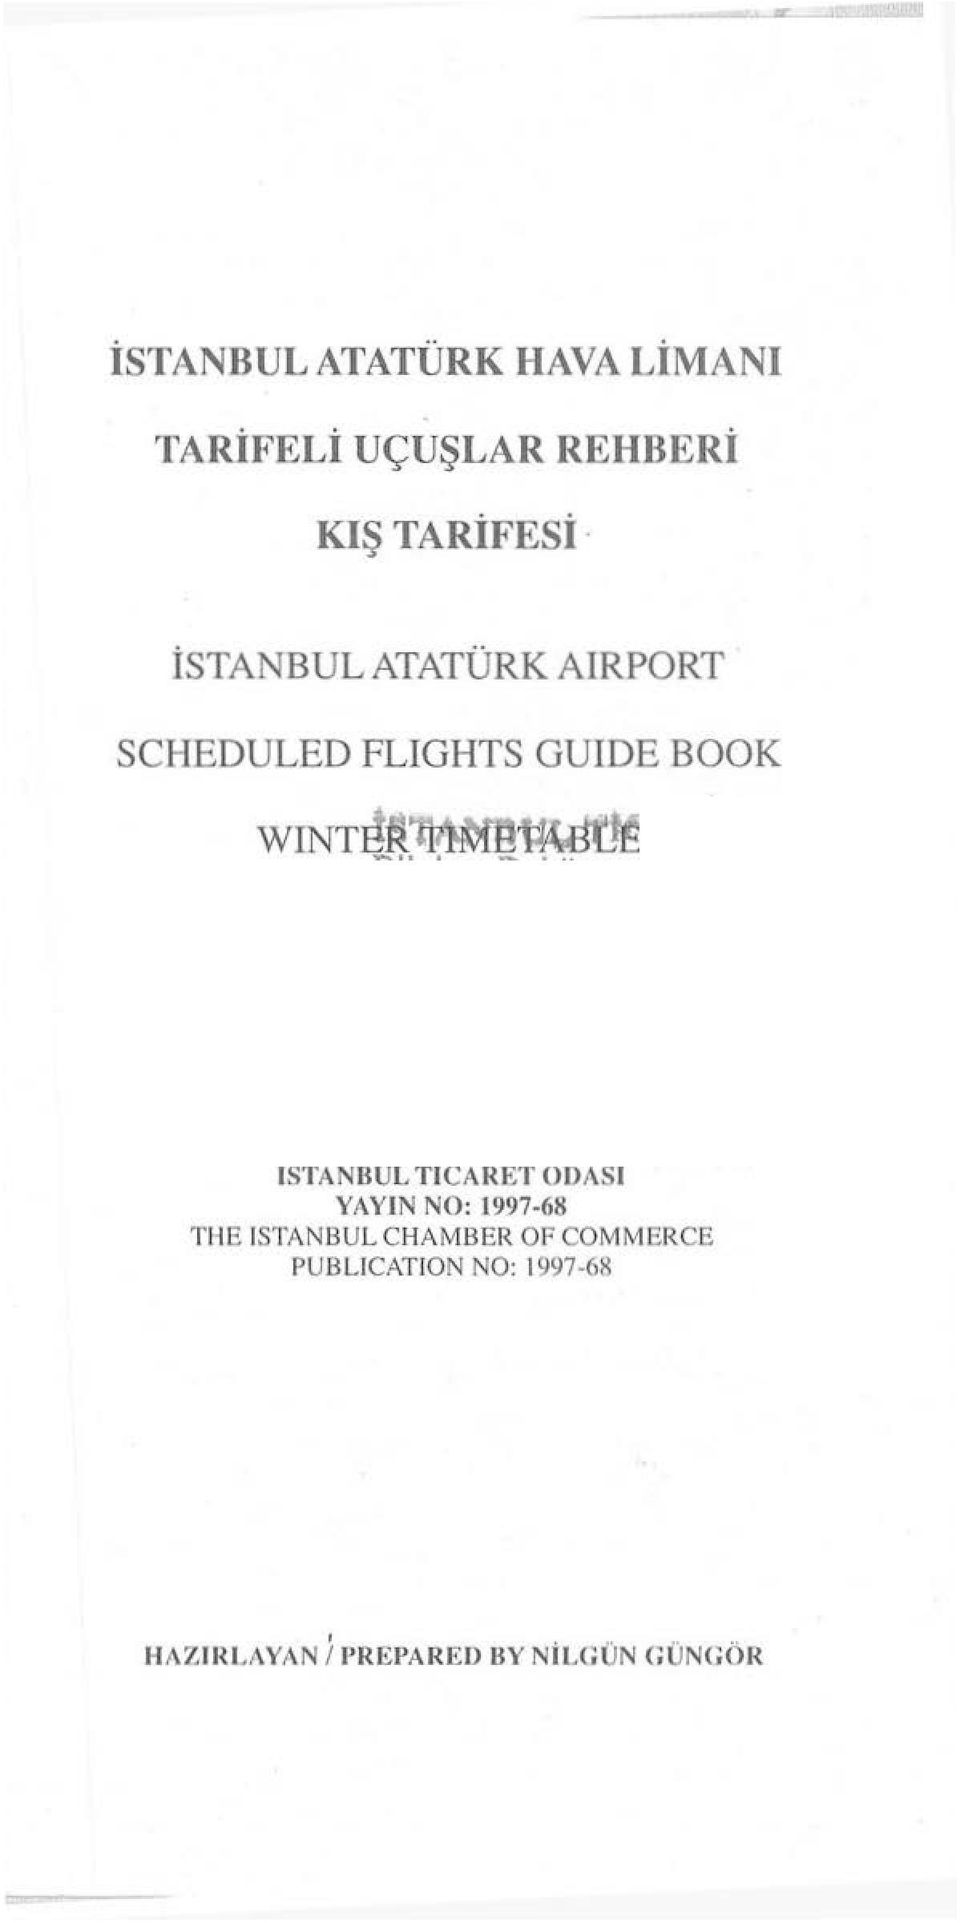 ISTANBUL TICARET ODASI YAYlN NO: 1997-68 THE ISTANBUL CHAMBER OF